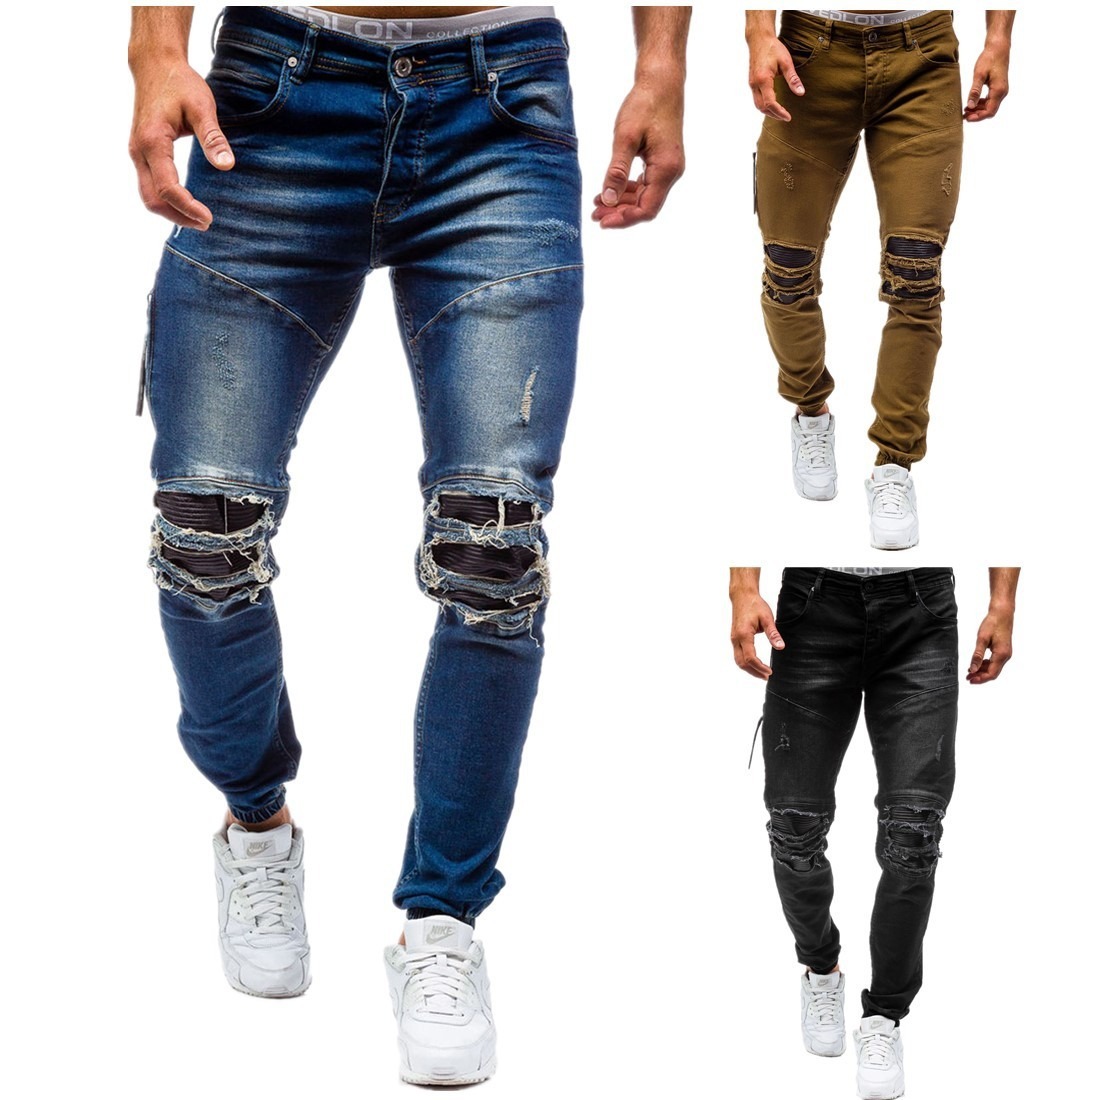 Tipos De Pantalones De Mezclilla Para Hombre De Moda - Ropa Para Hombres